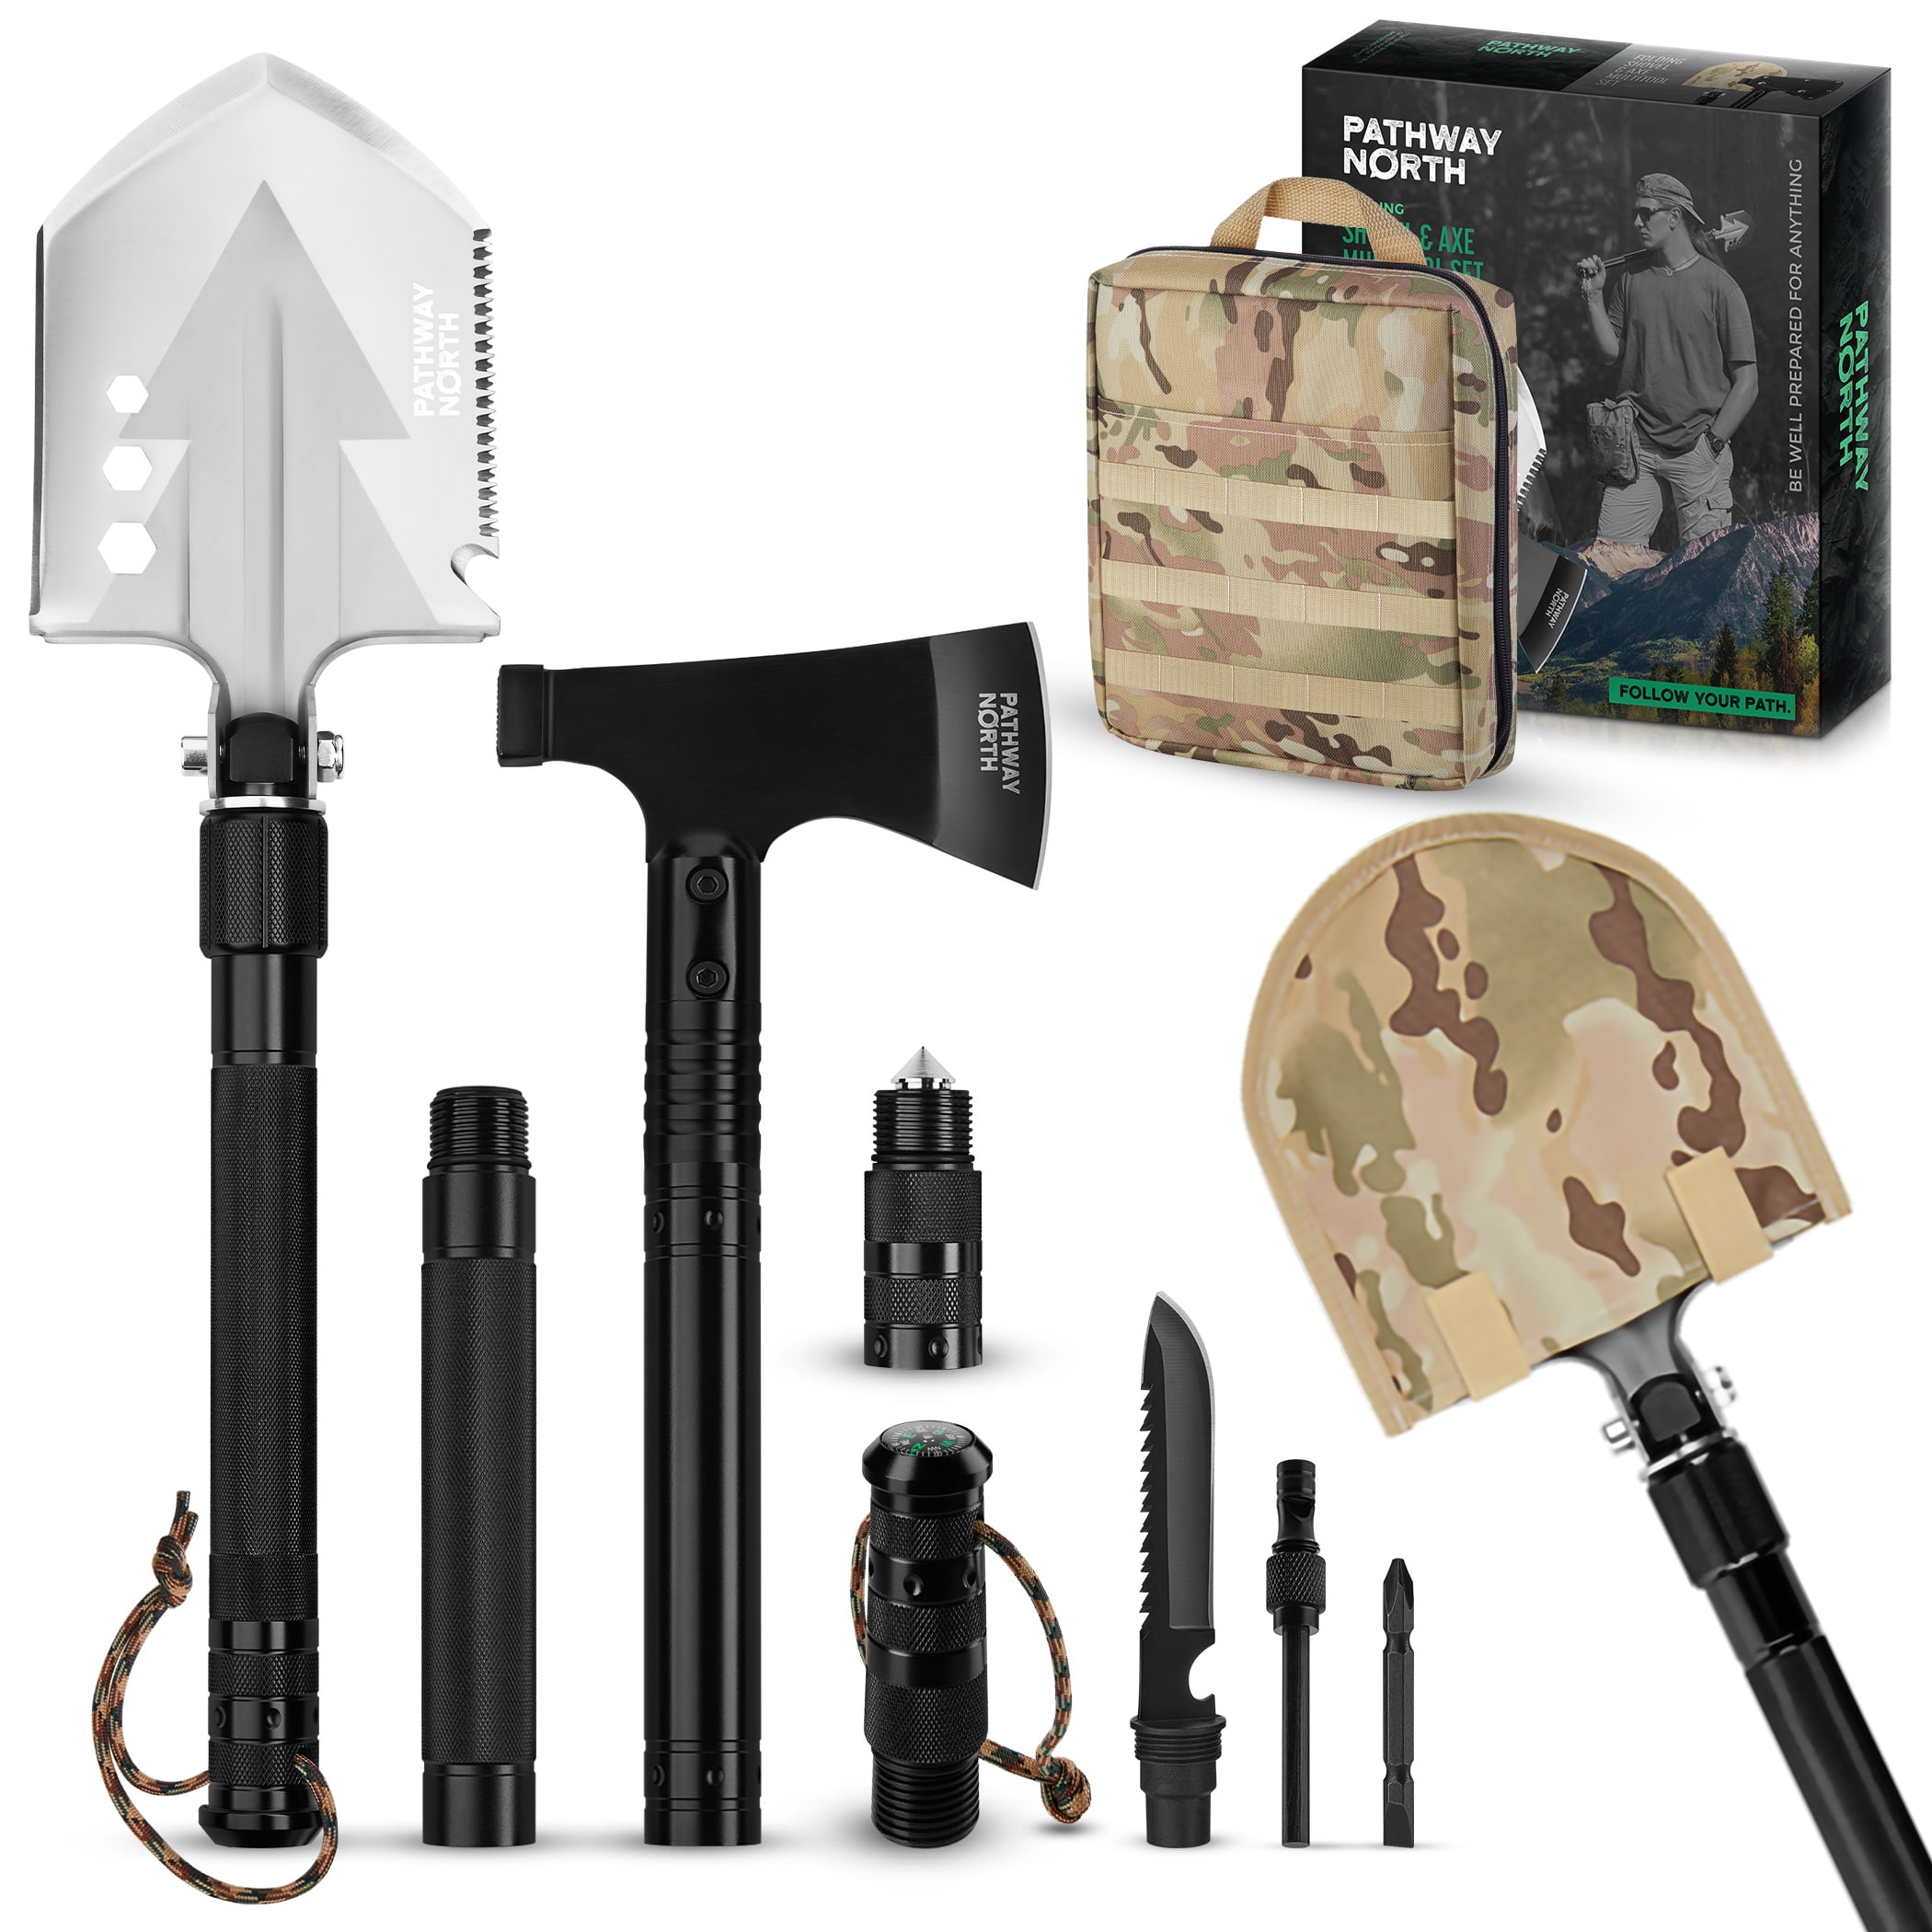 Wrench Details about   Axe Tomahawk Tactical Matchet Axes Hatchet Camping Survival Axe Hammer 